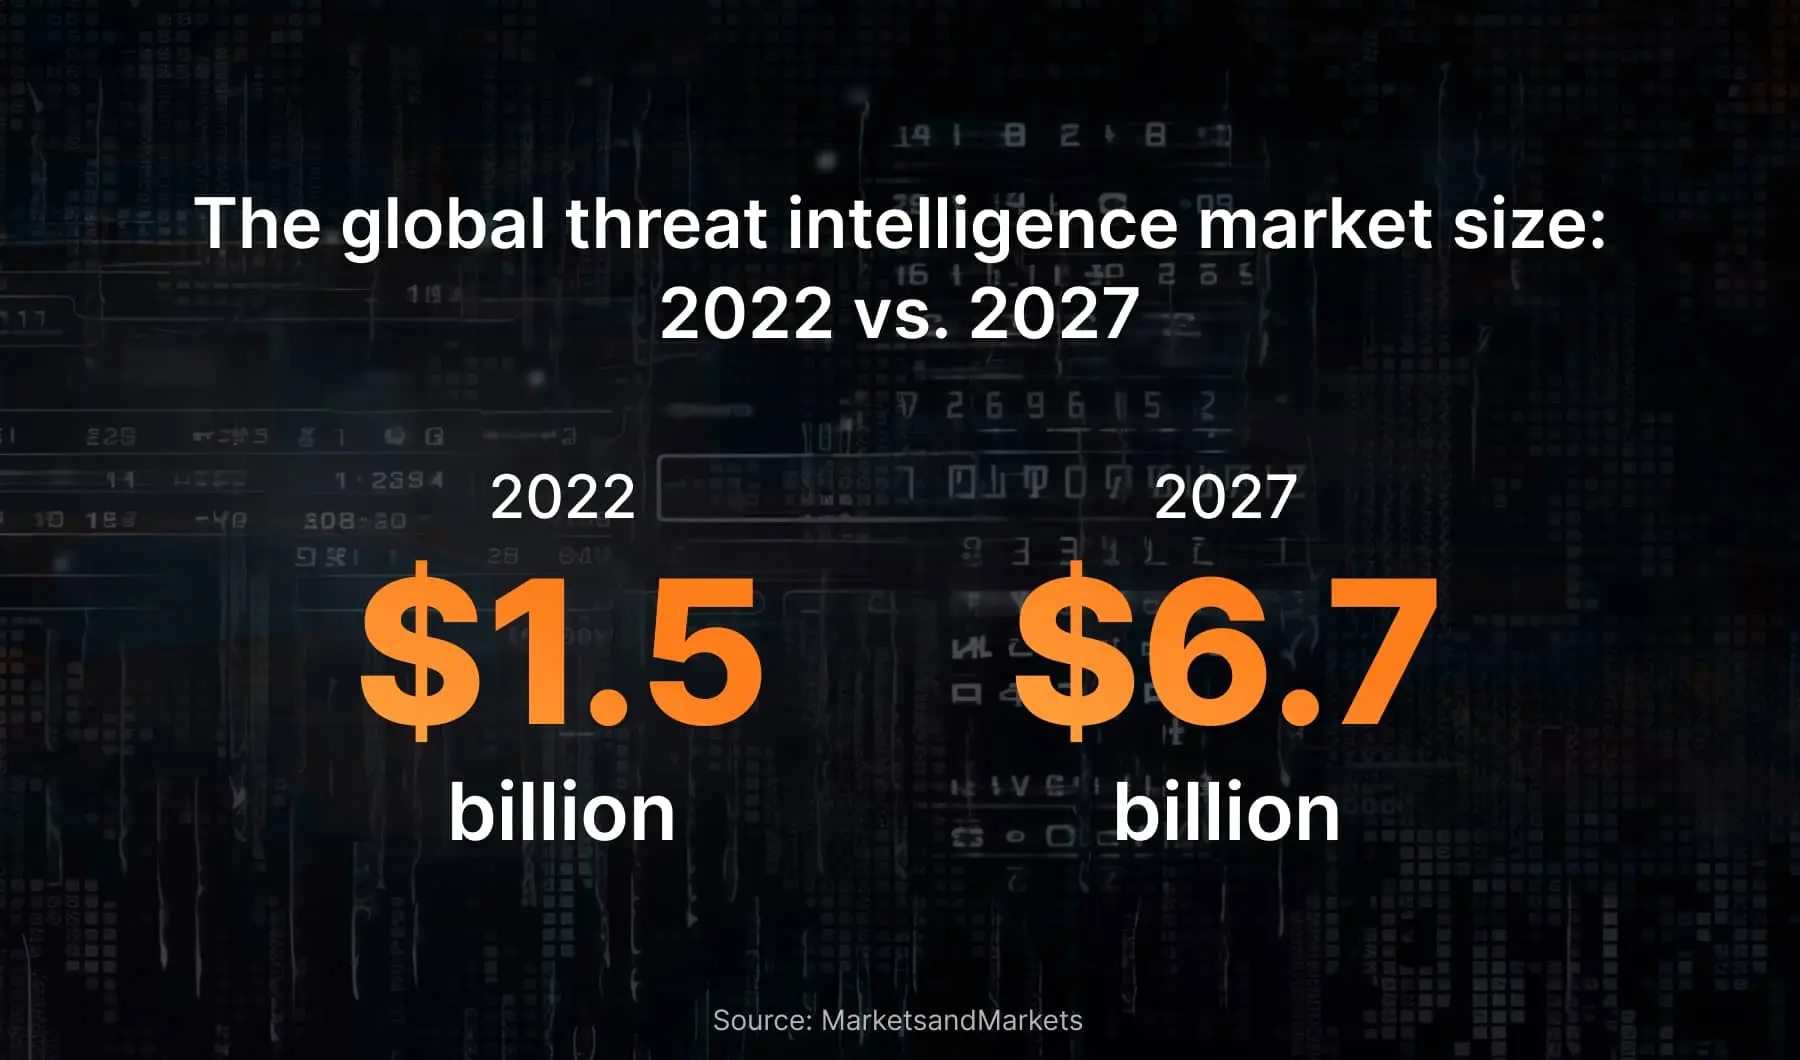 The global threat intelligence market size 2022 vs 2027